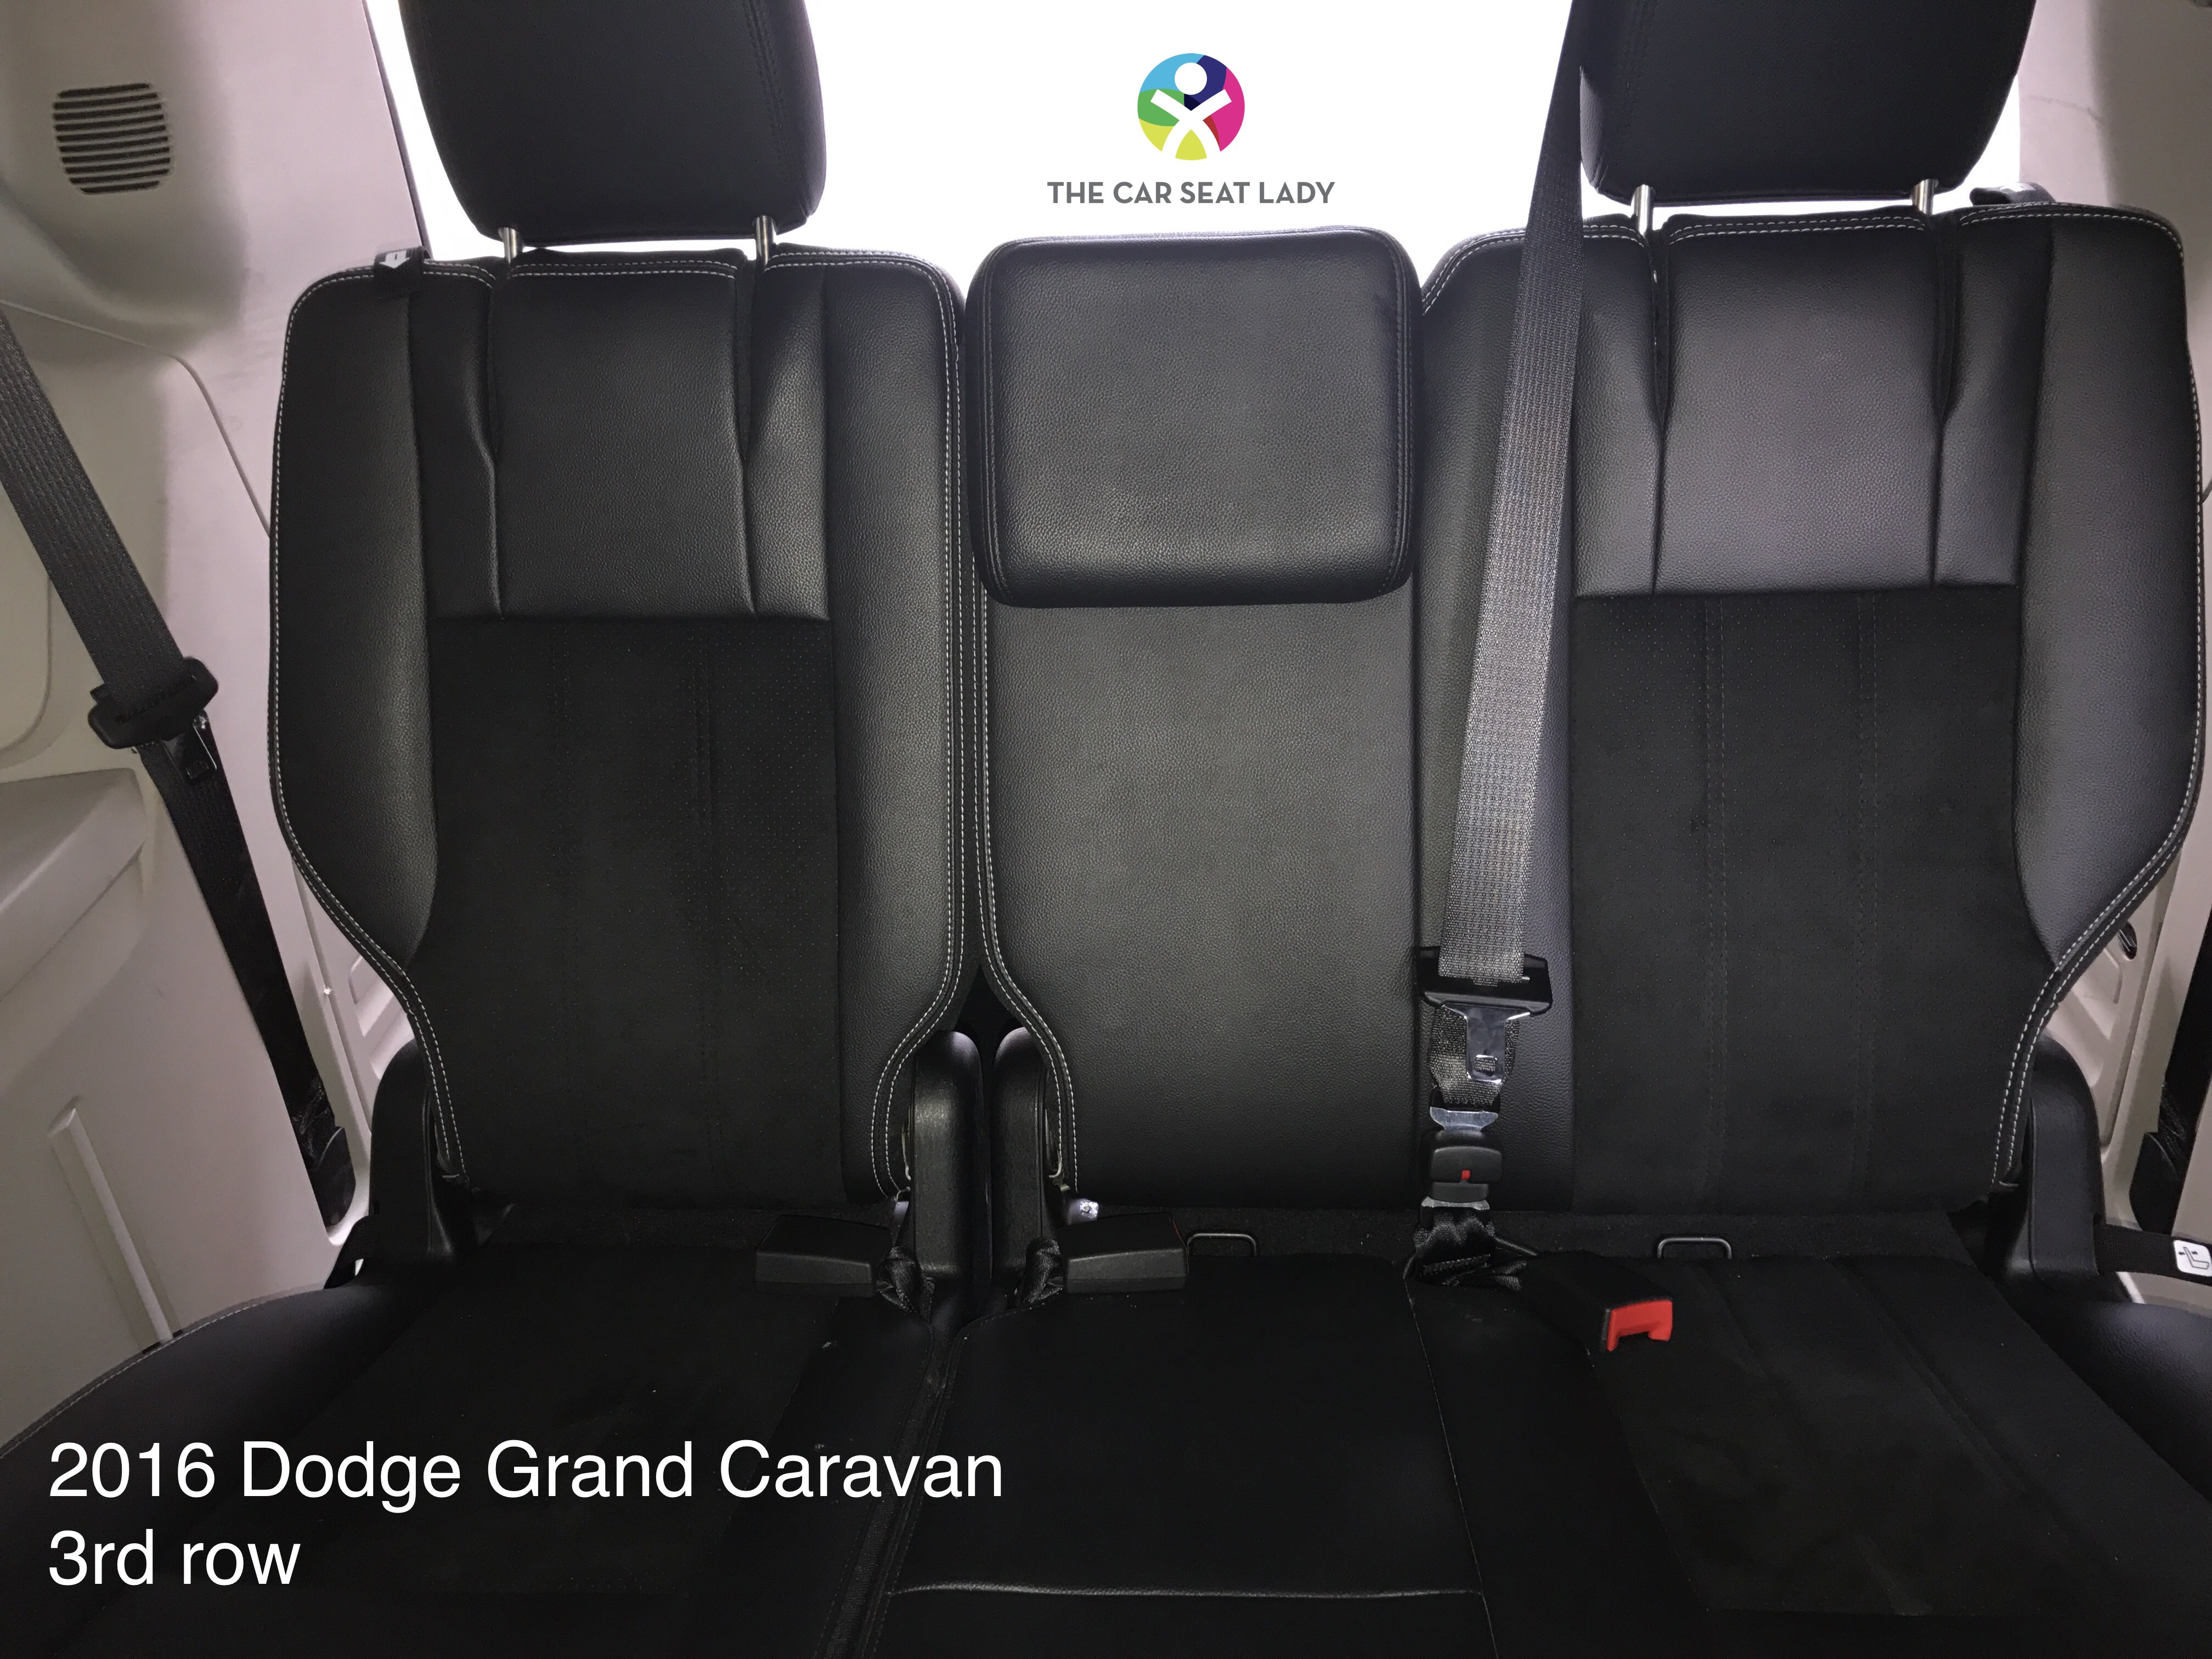 The Car Seat LadyDodge Grand Caravan - The Car Seat Lady